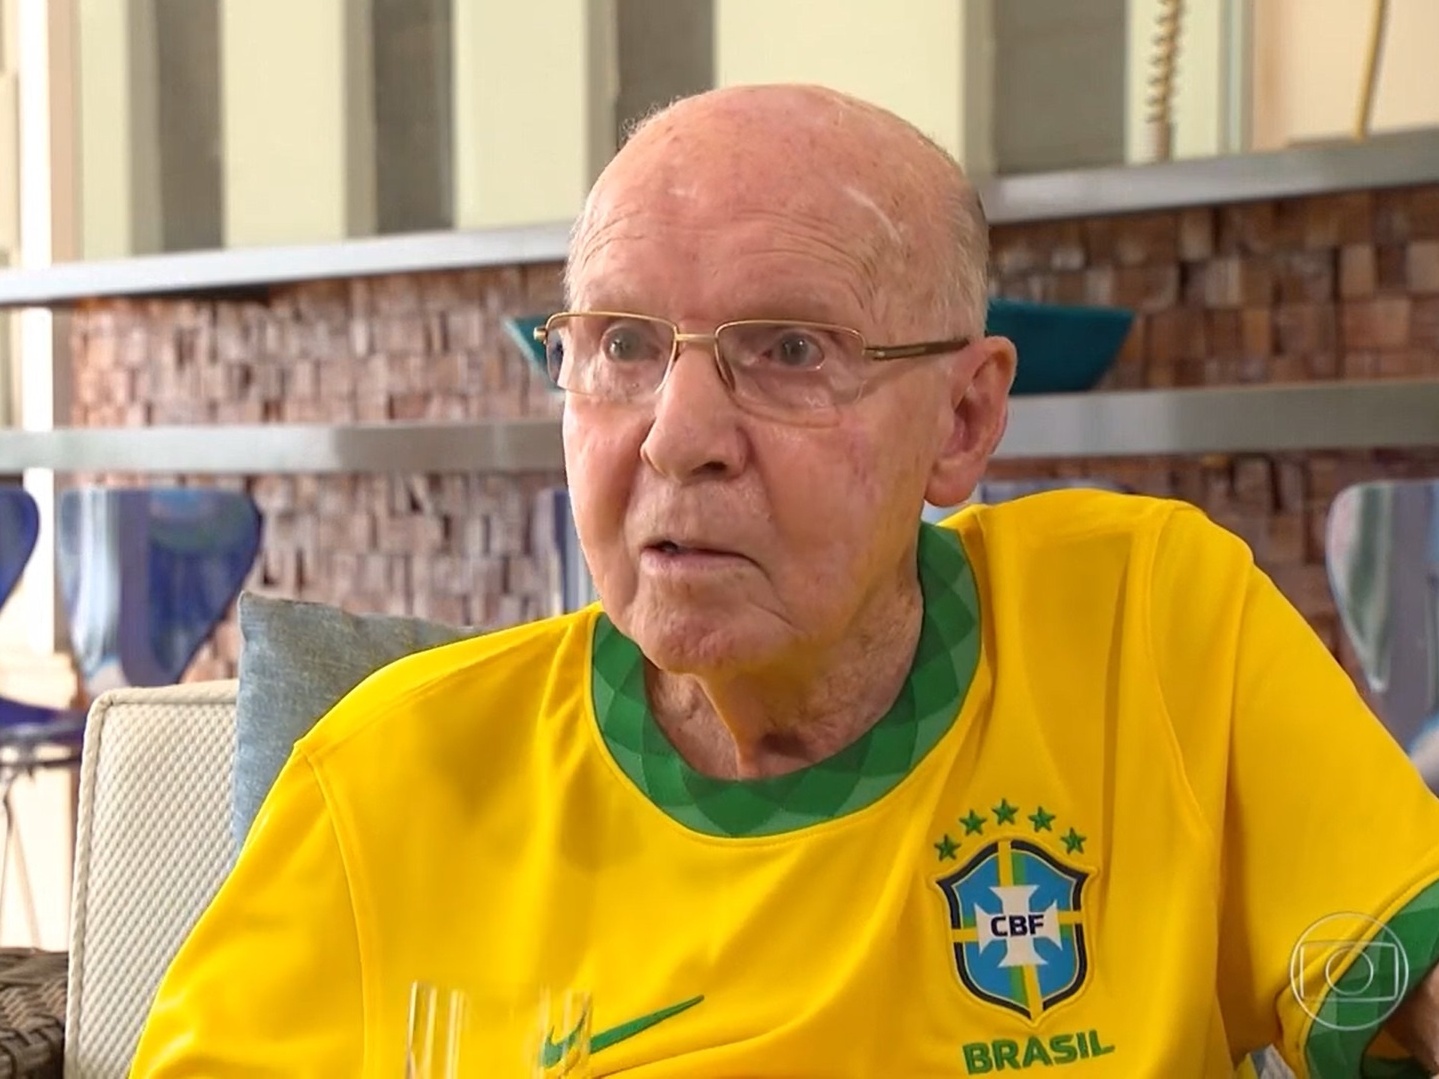 Lenda do futebol, Zagallo morre aos 92 anos no Rio de Janeiro